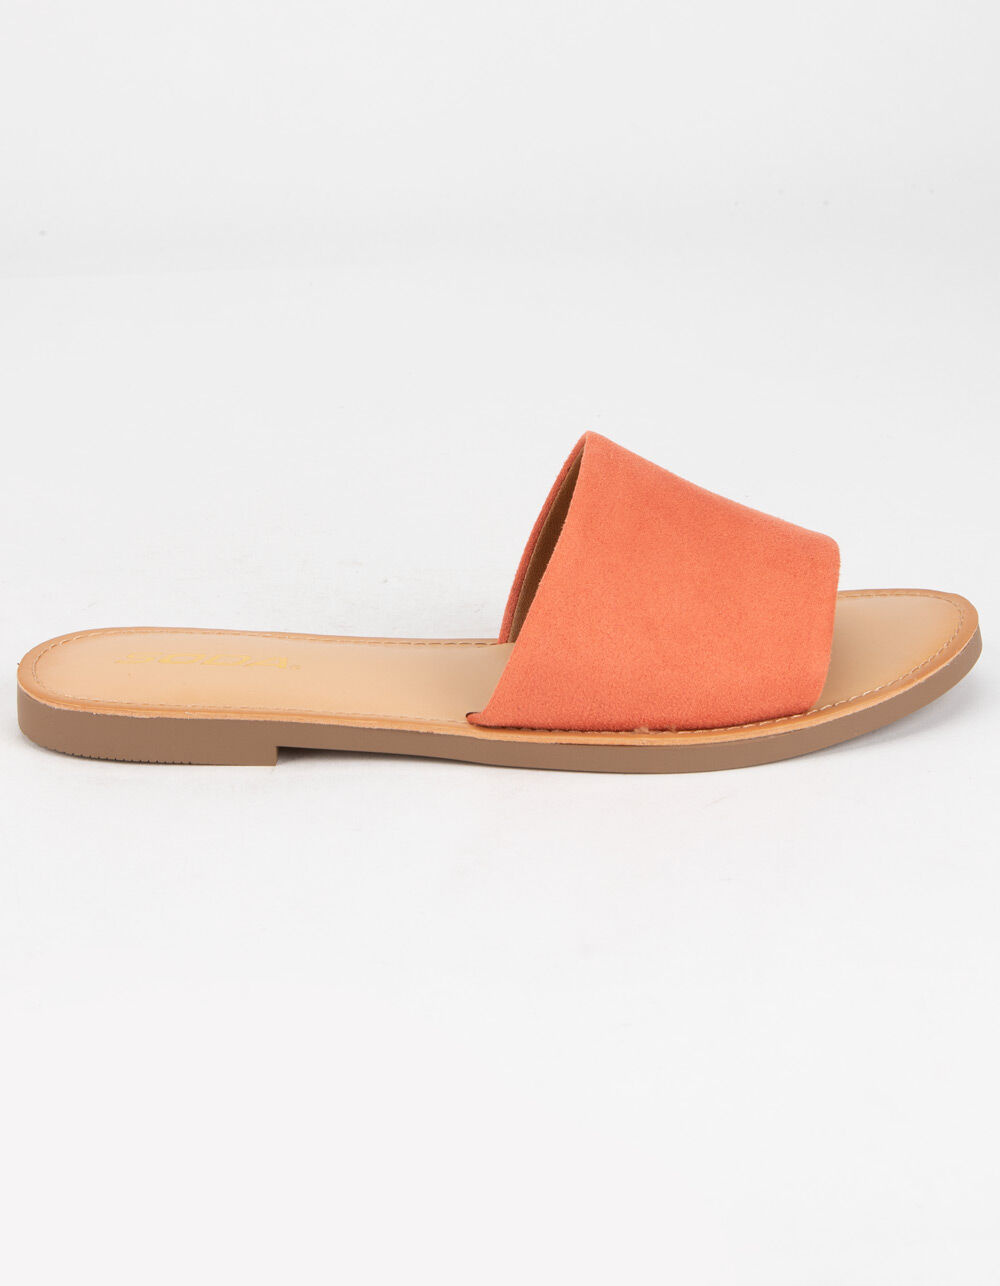 SODA Single Strap Womens Coral Slide Sandals - CORAL | Tillys